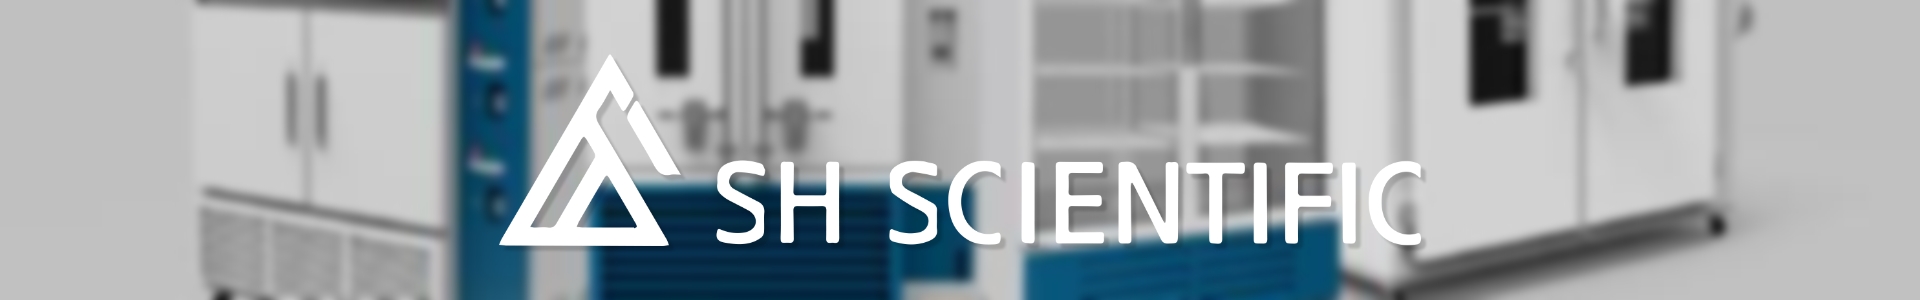 sh scientific brand - Tủ an toàn sinh học SH Scientific